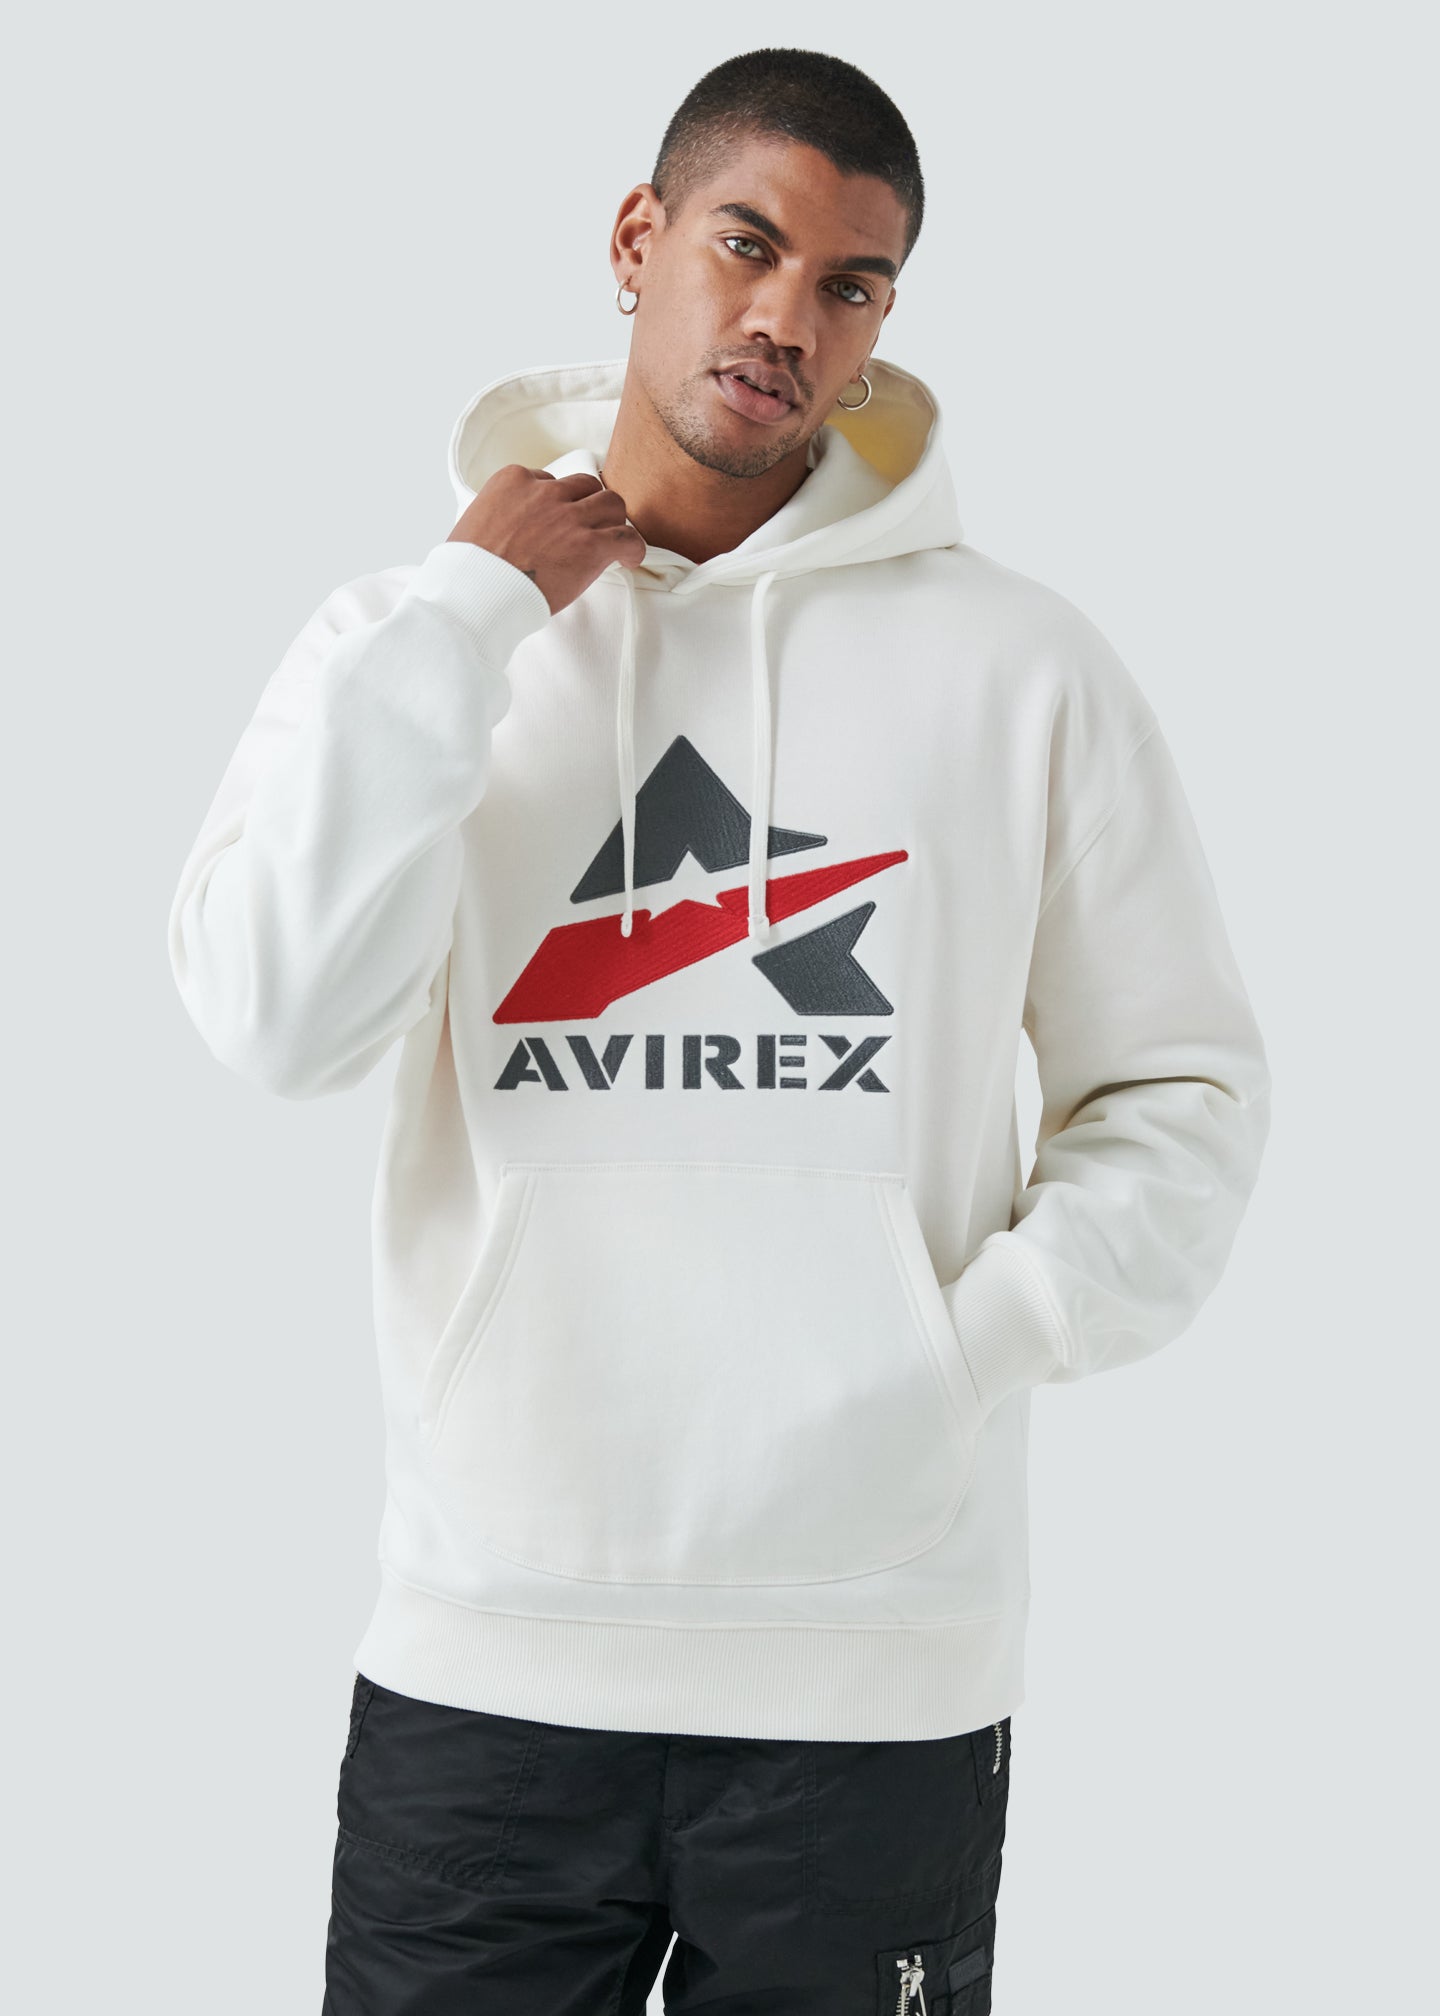 White Avirex hoody with large logo